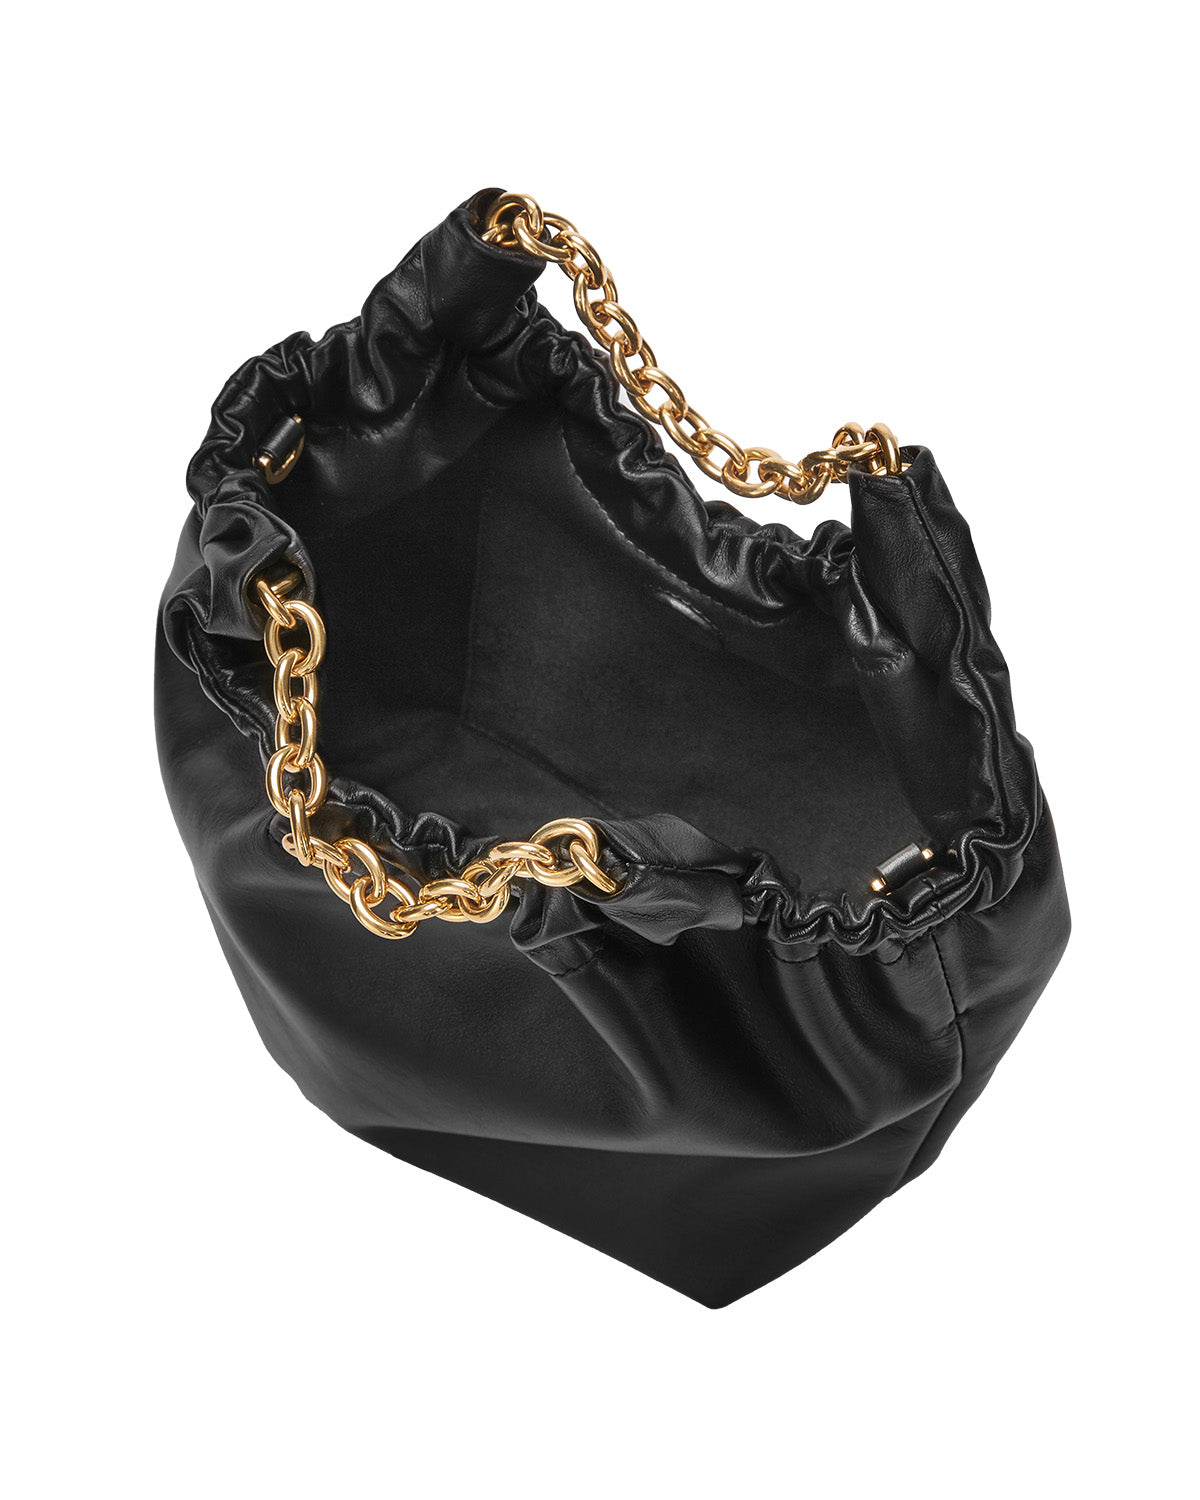 Small Miami Handbag (Smooth Leather Black)